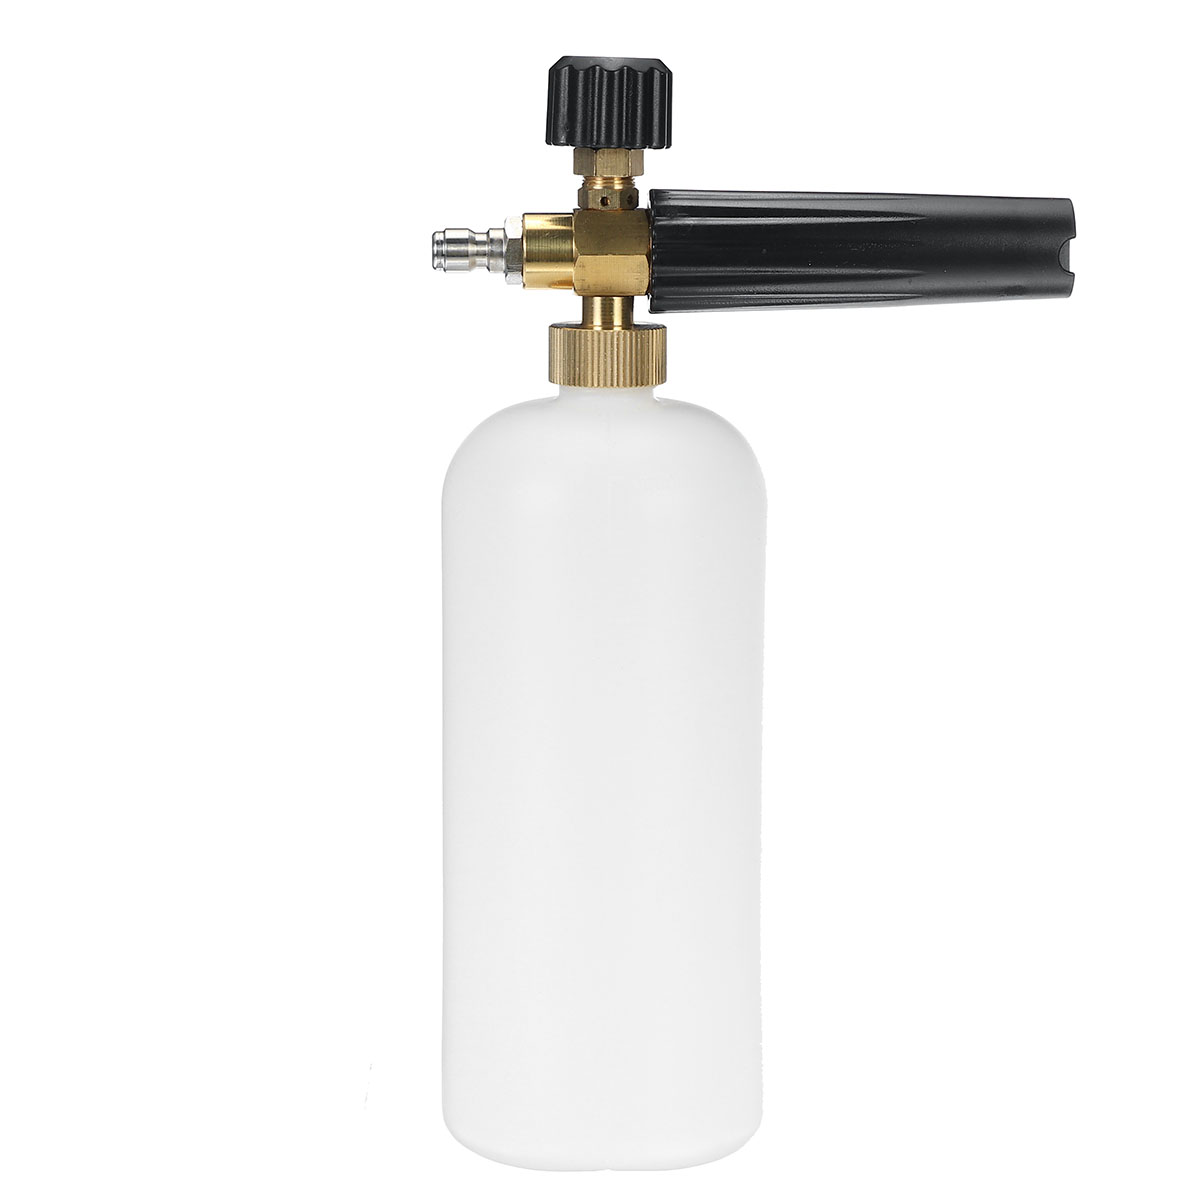 Adjustable-Snow-Foam-Lance-Sprayer-Washer-Soap-Bottle-Car-Pressure-Washer-1L-1662575-1